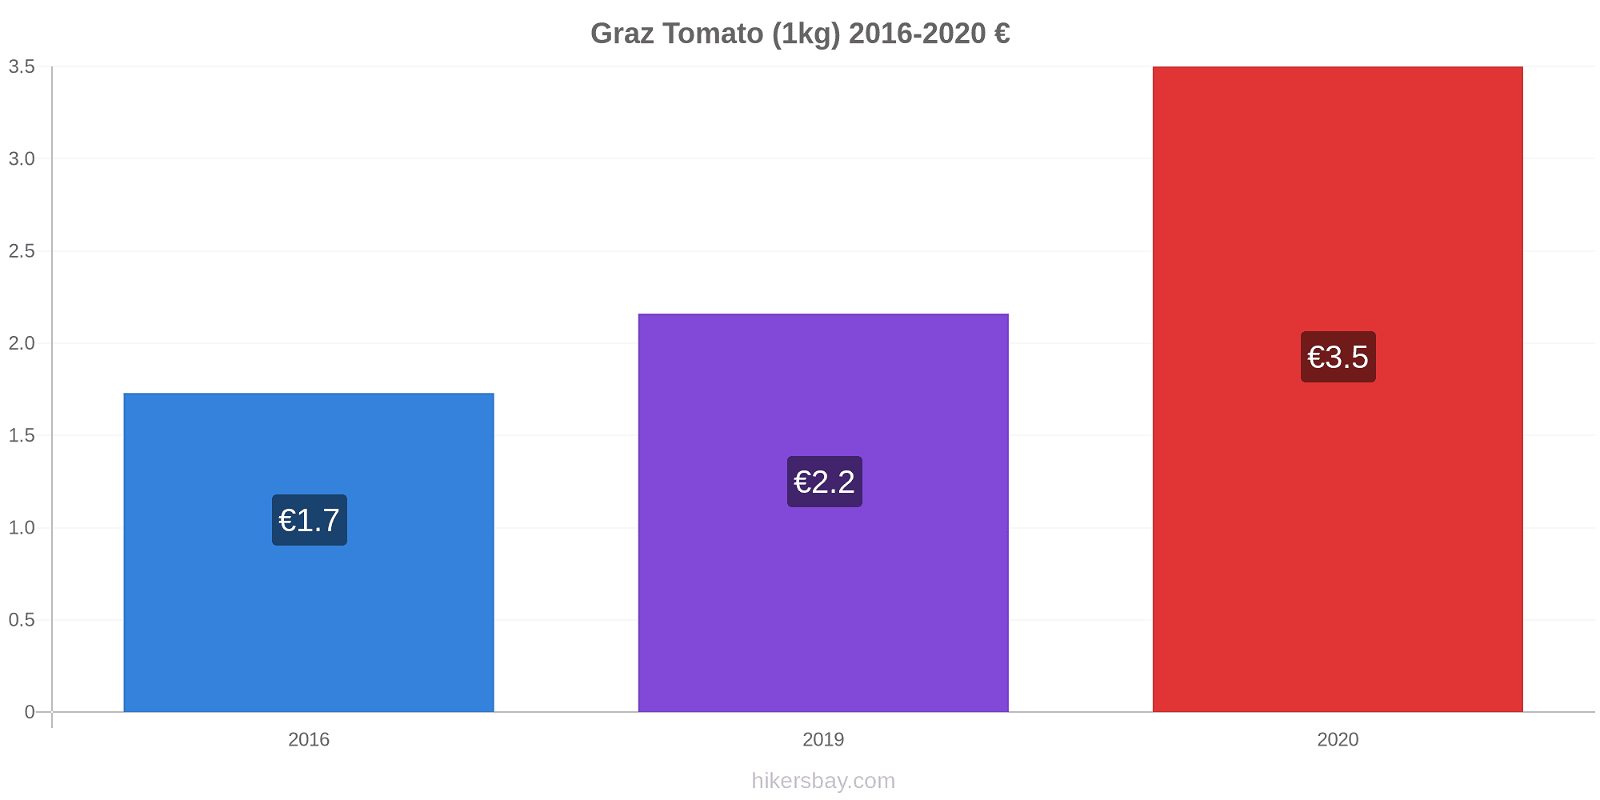 Graz price changes Tomato (1kg) hikersbay.com